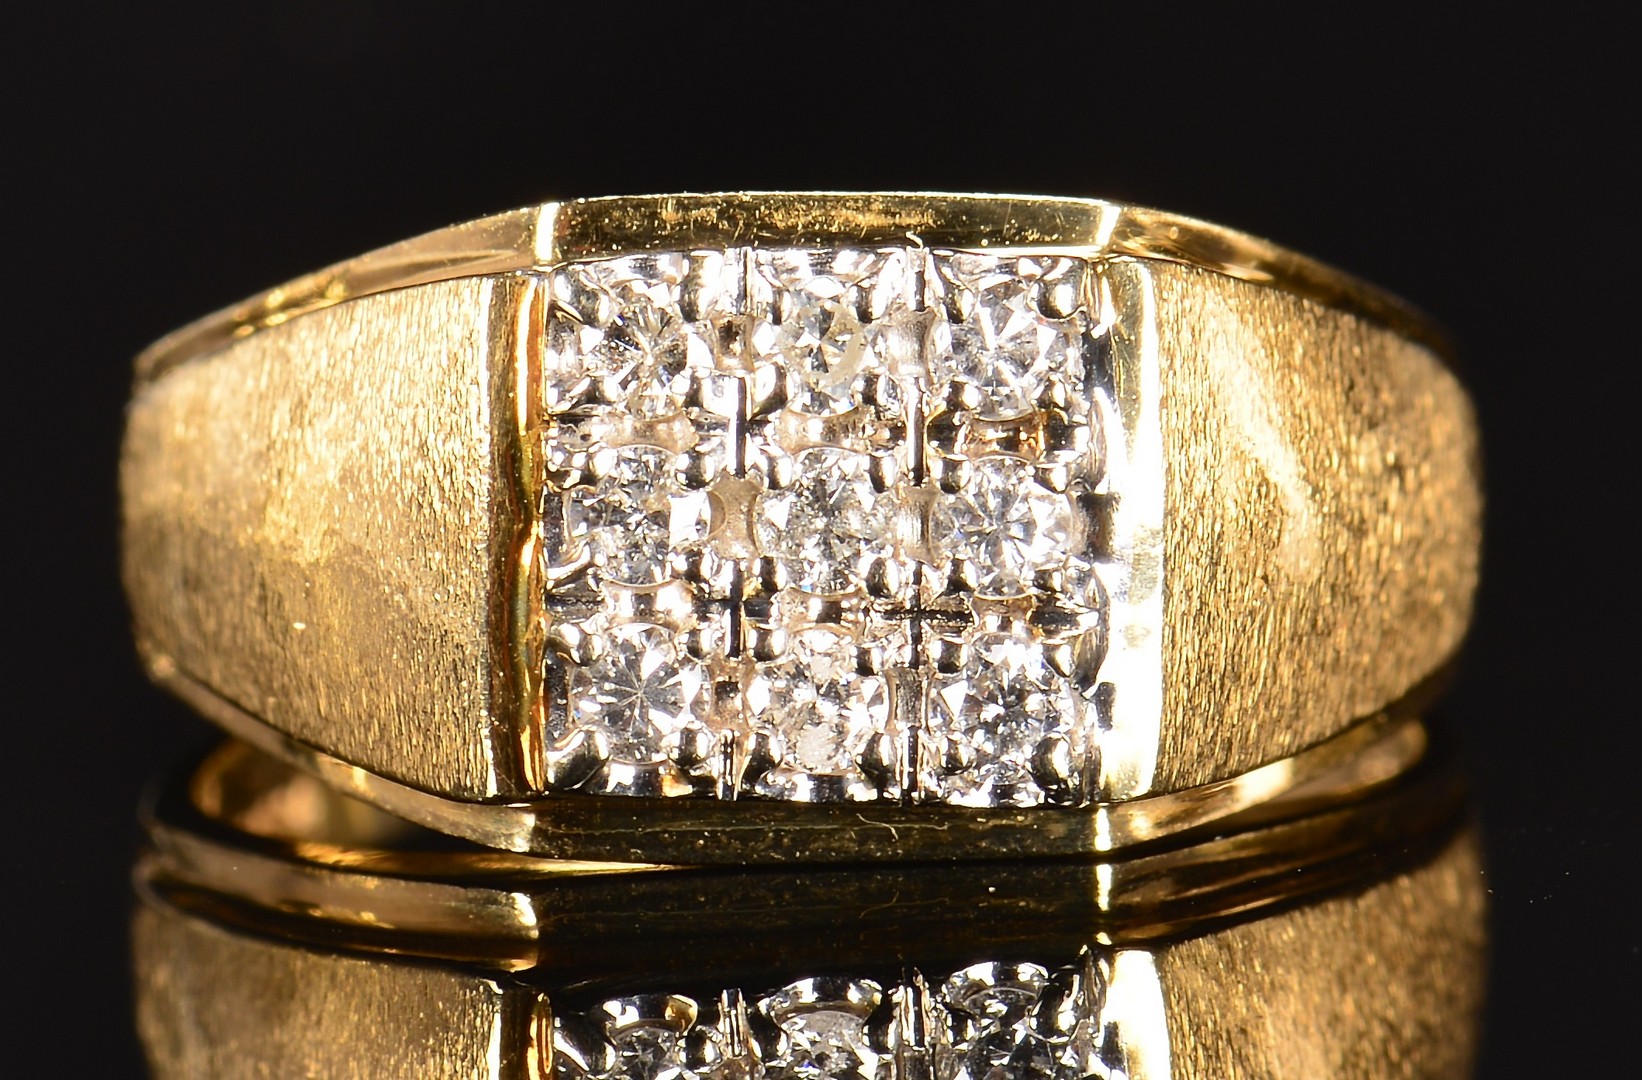 Lot 592: 5 Men's diamond fashion rings